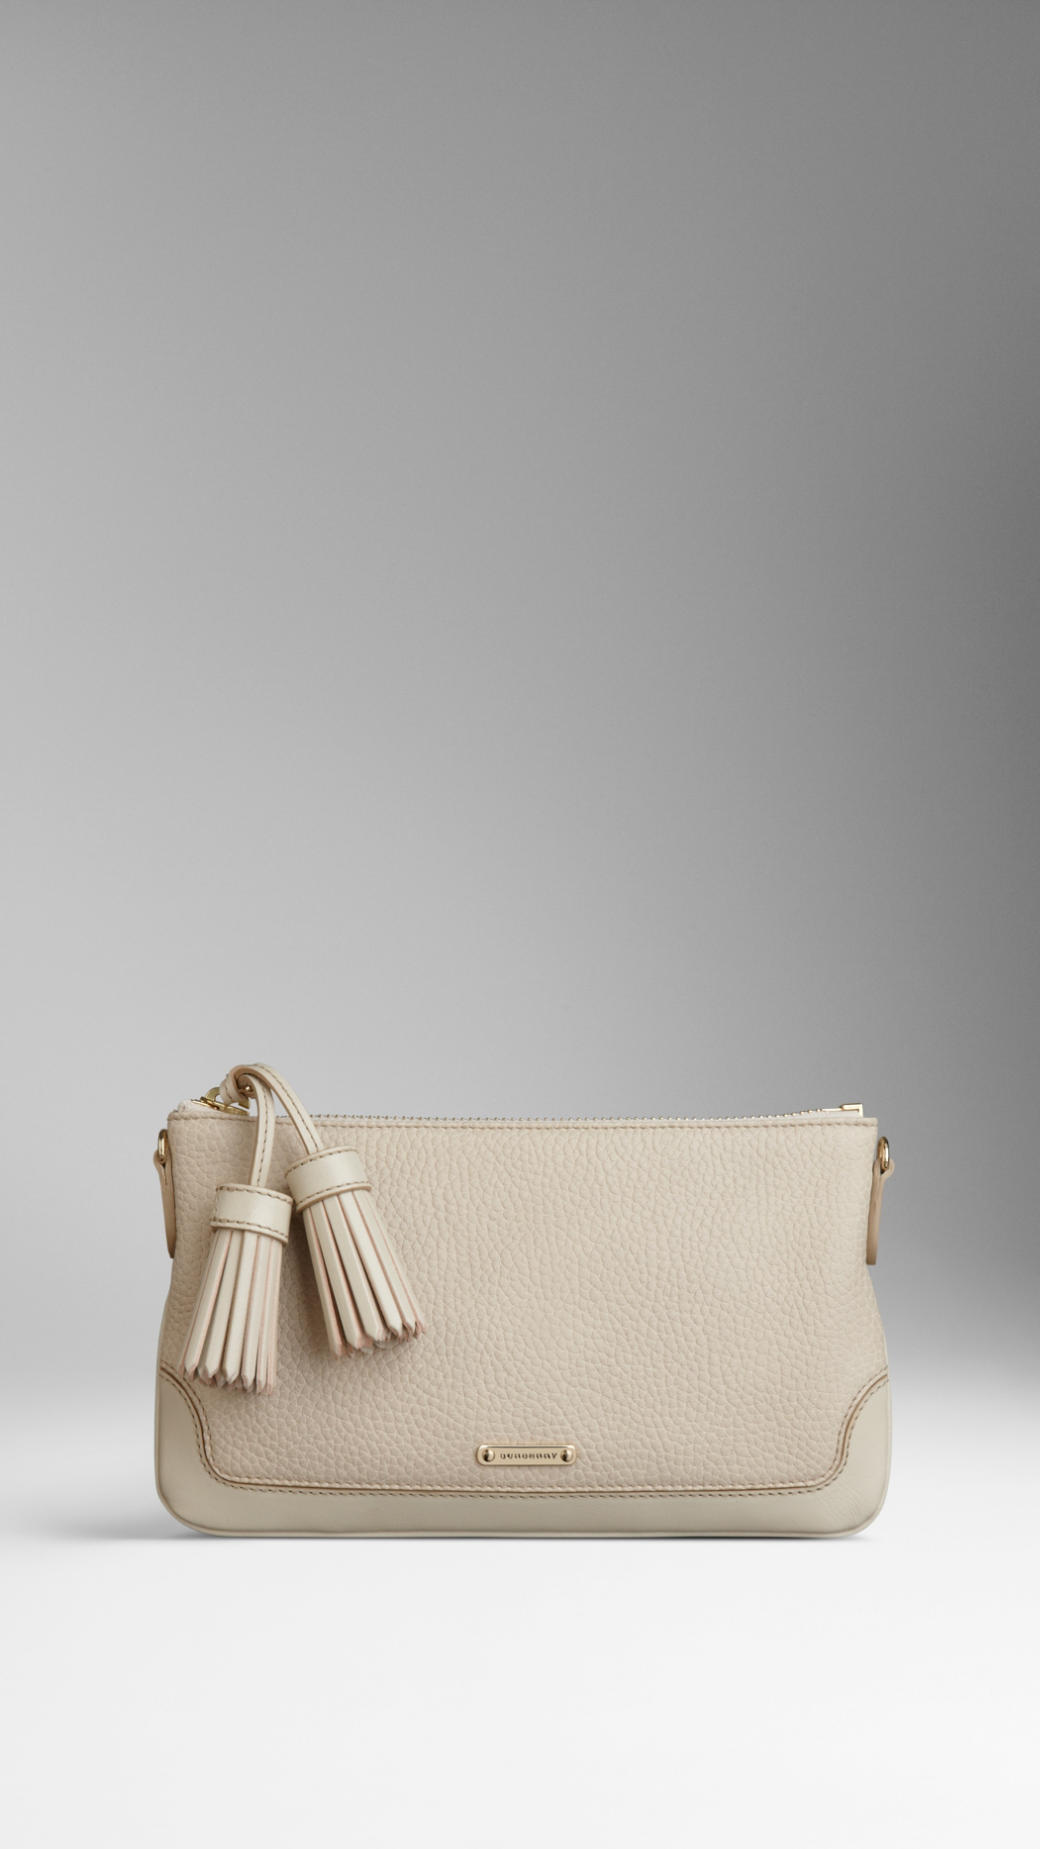 Burberry London Leather Tassel Clutch Bag in Beige (off white) | Lyst